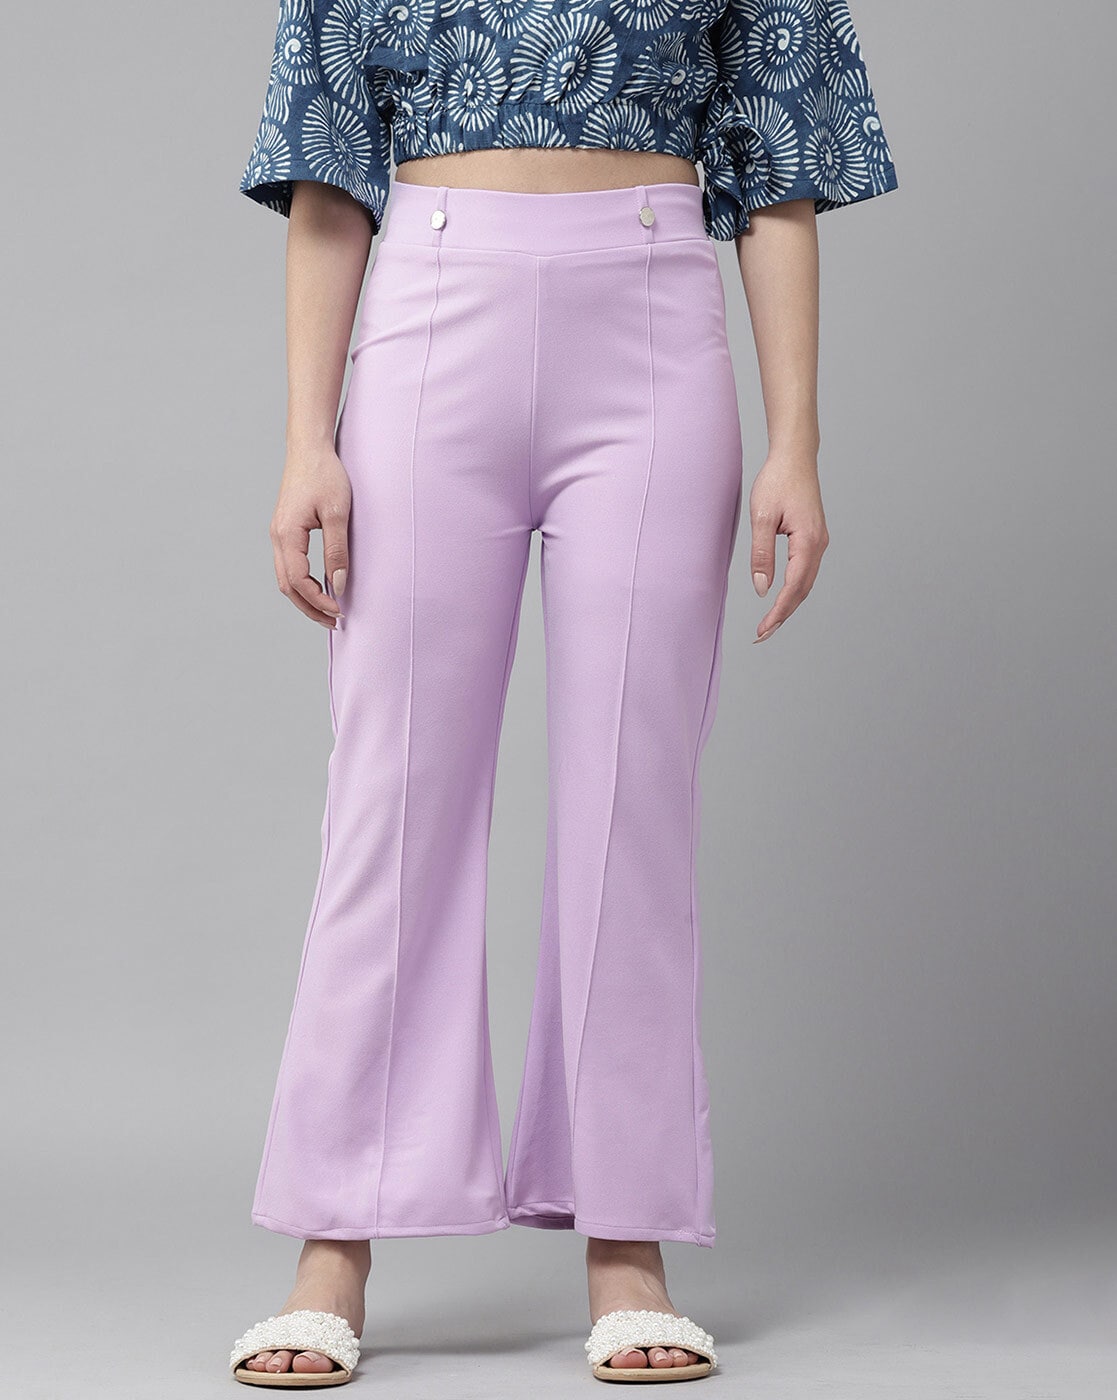 Royal purple wide-leg pants | HOWTOWEAR Fashion